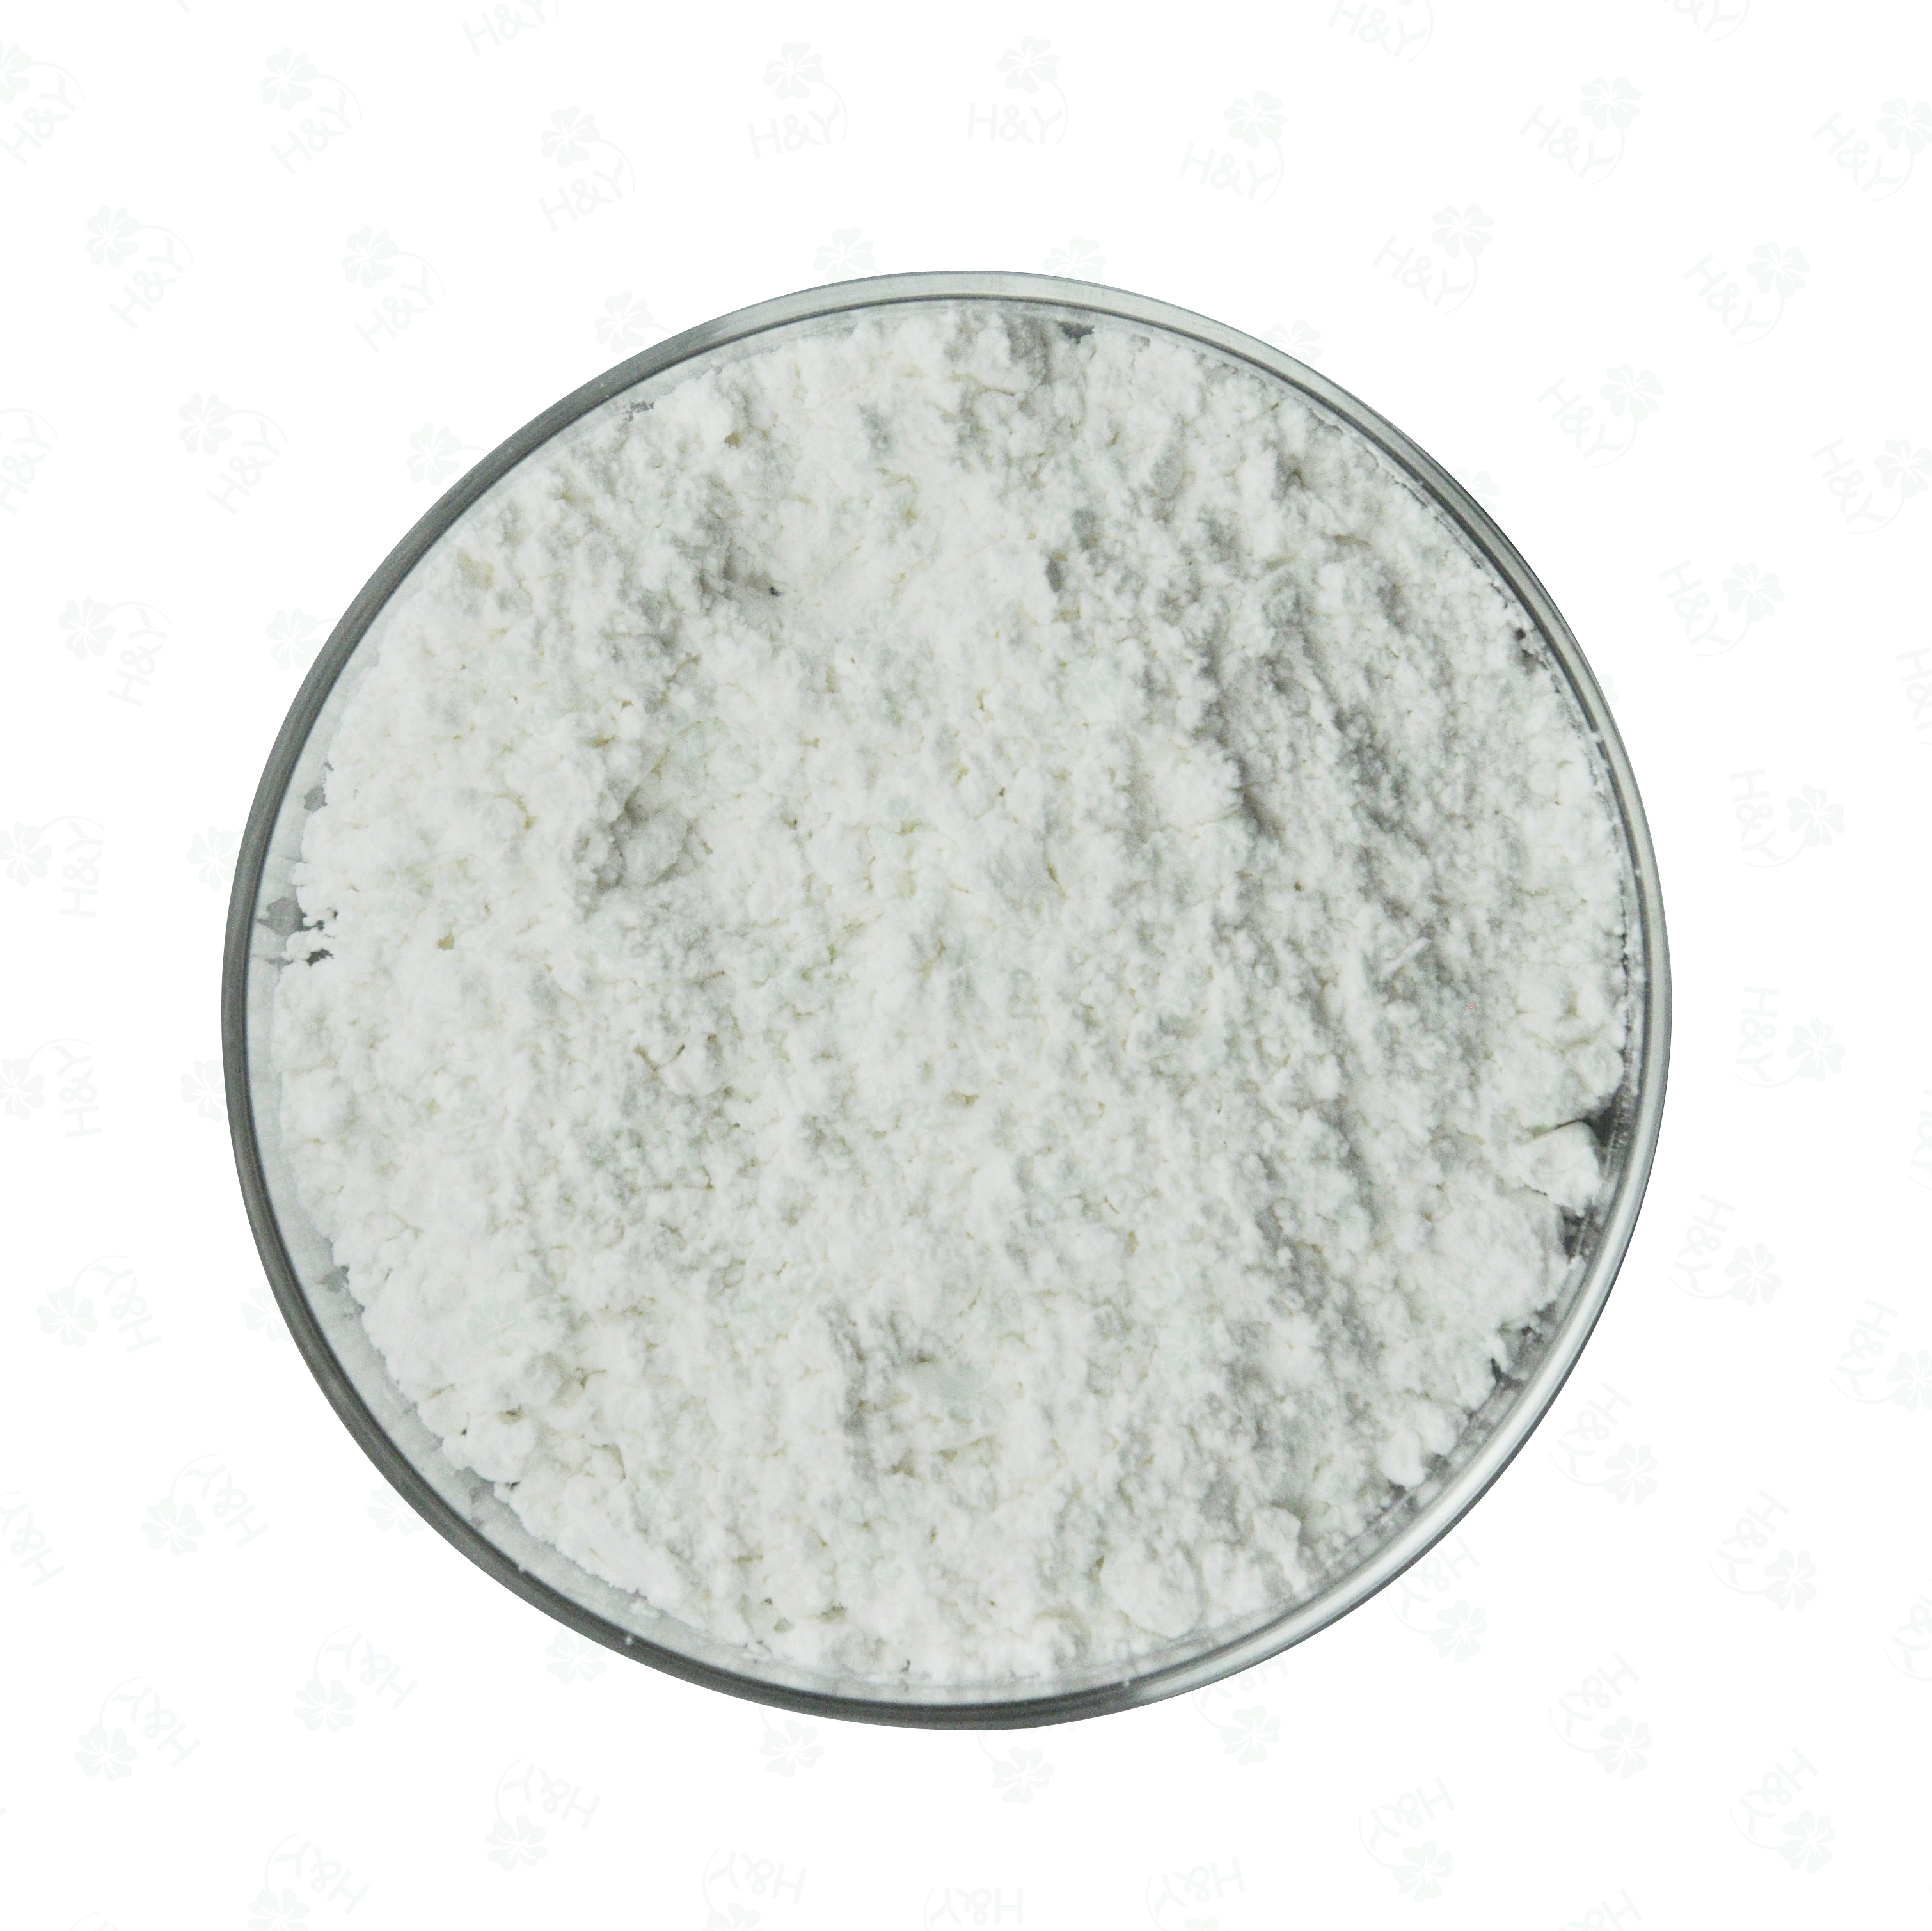 China factory supply hign quality buchanania latifolia extract powder 97% helicid